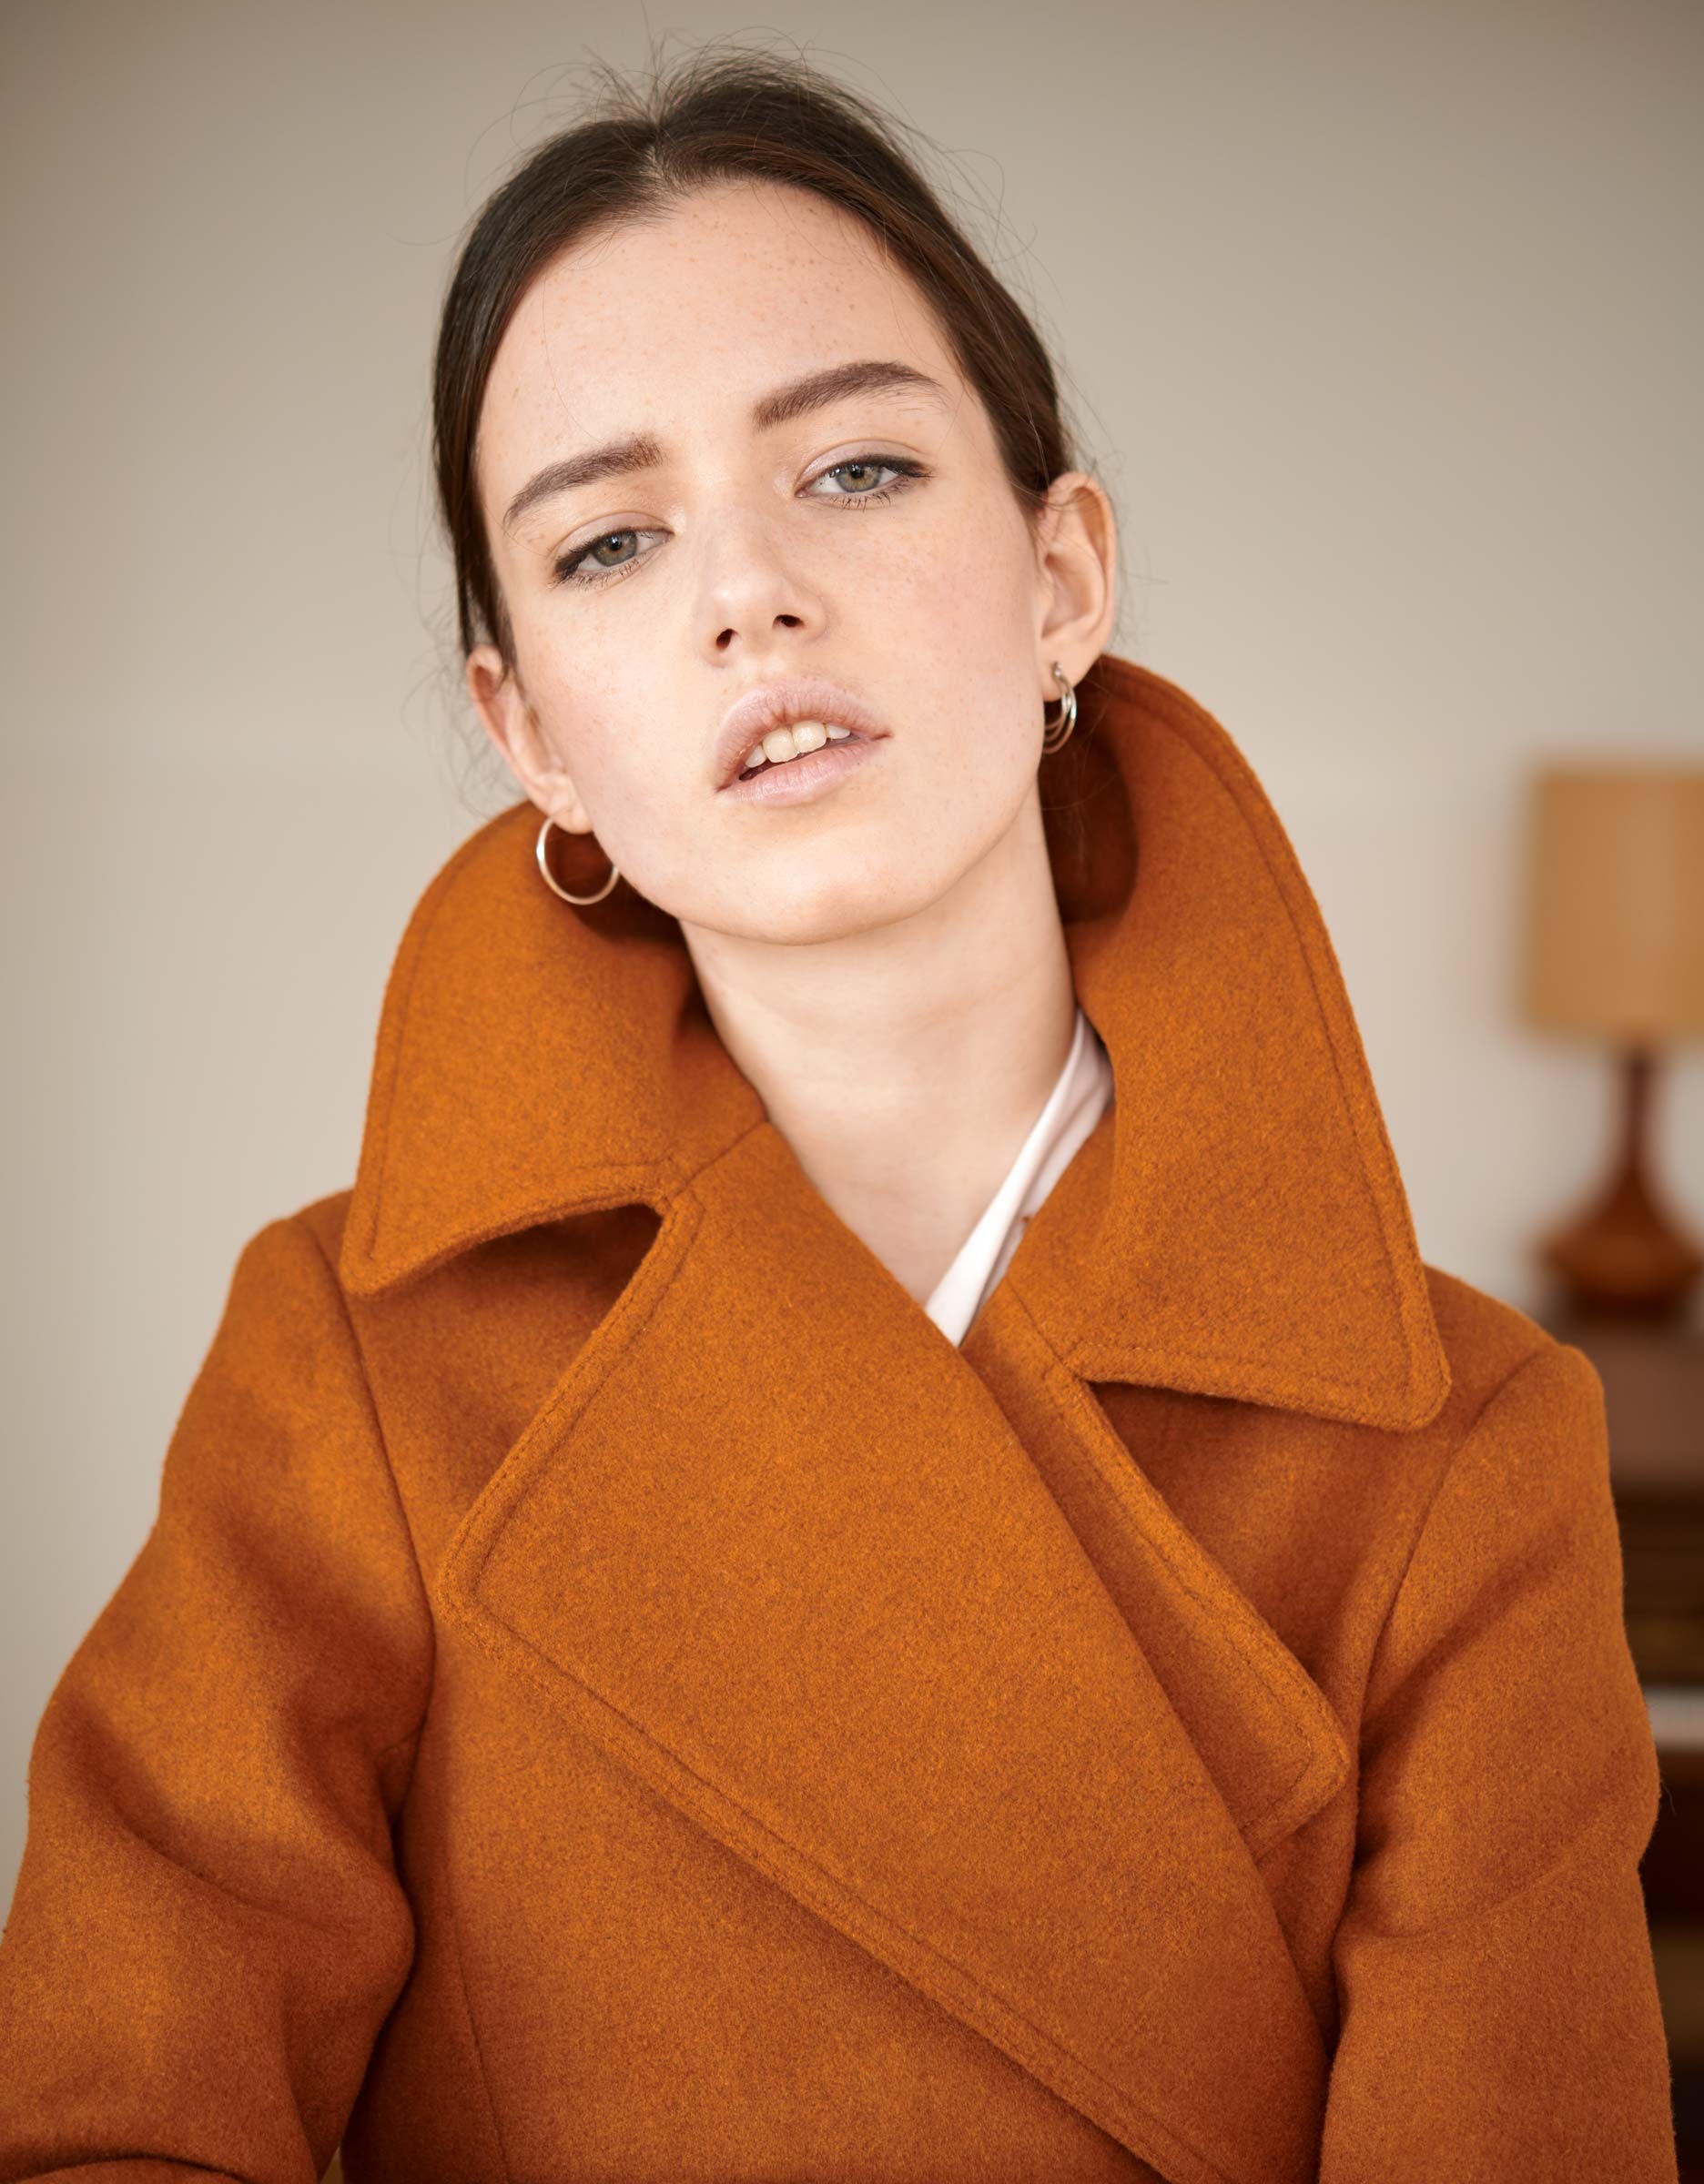 Coat Mael Color for women - CARAMEL - REIKO